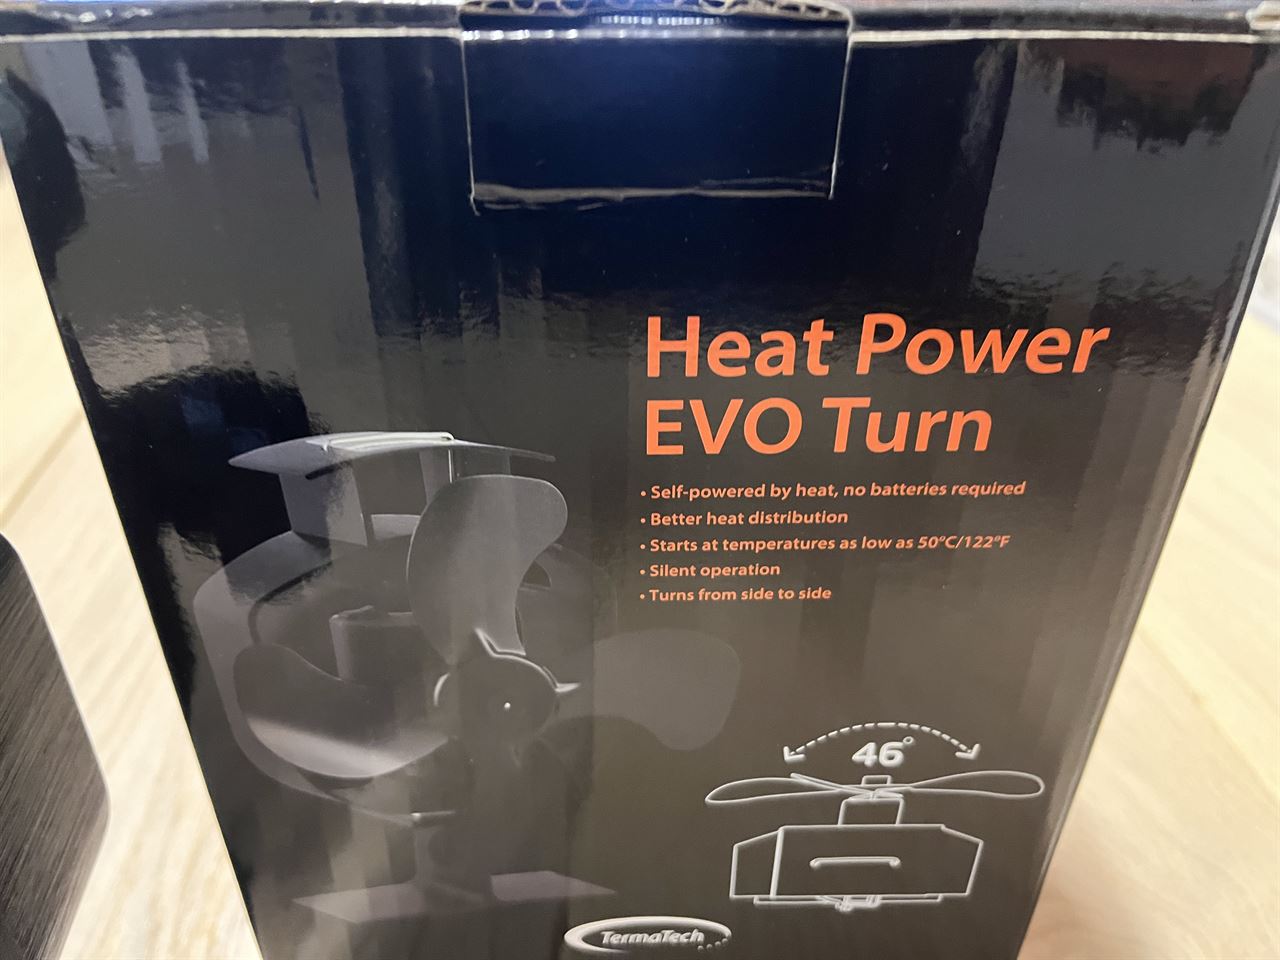 Heat Power Evo Turn (Termatech)